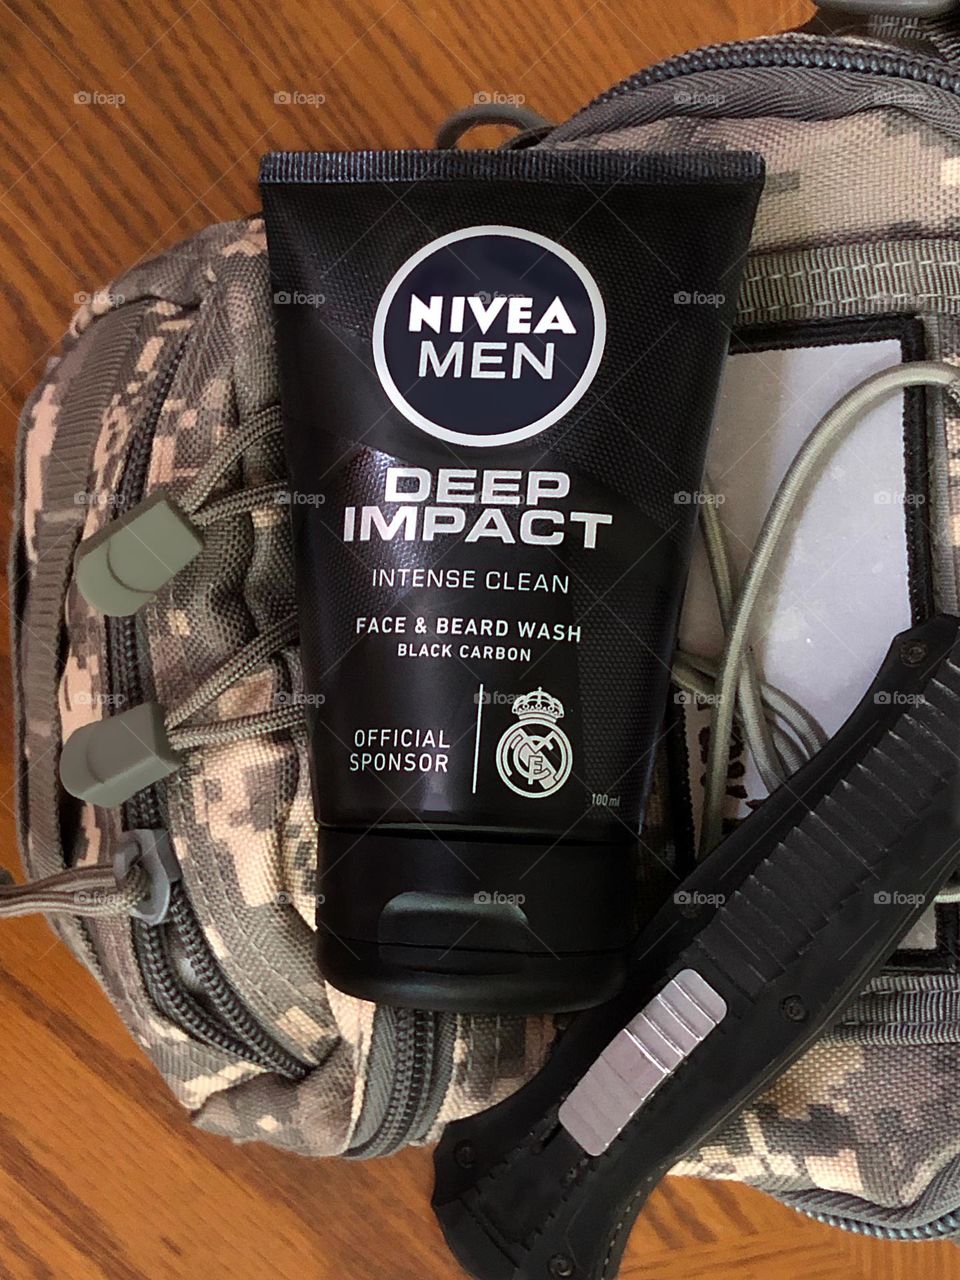 Shaving products-Nivea Deep Impact.